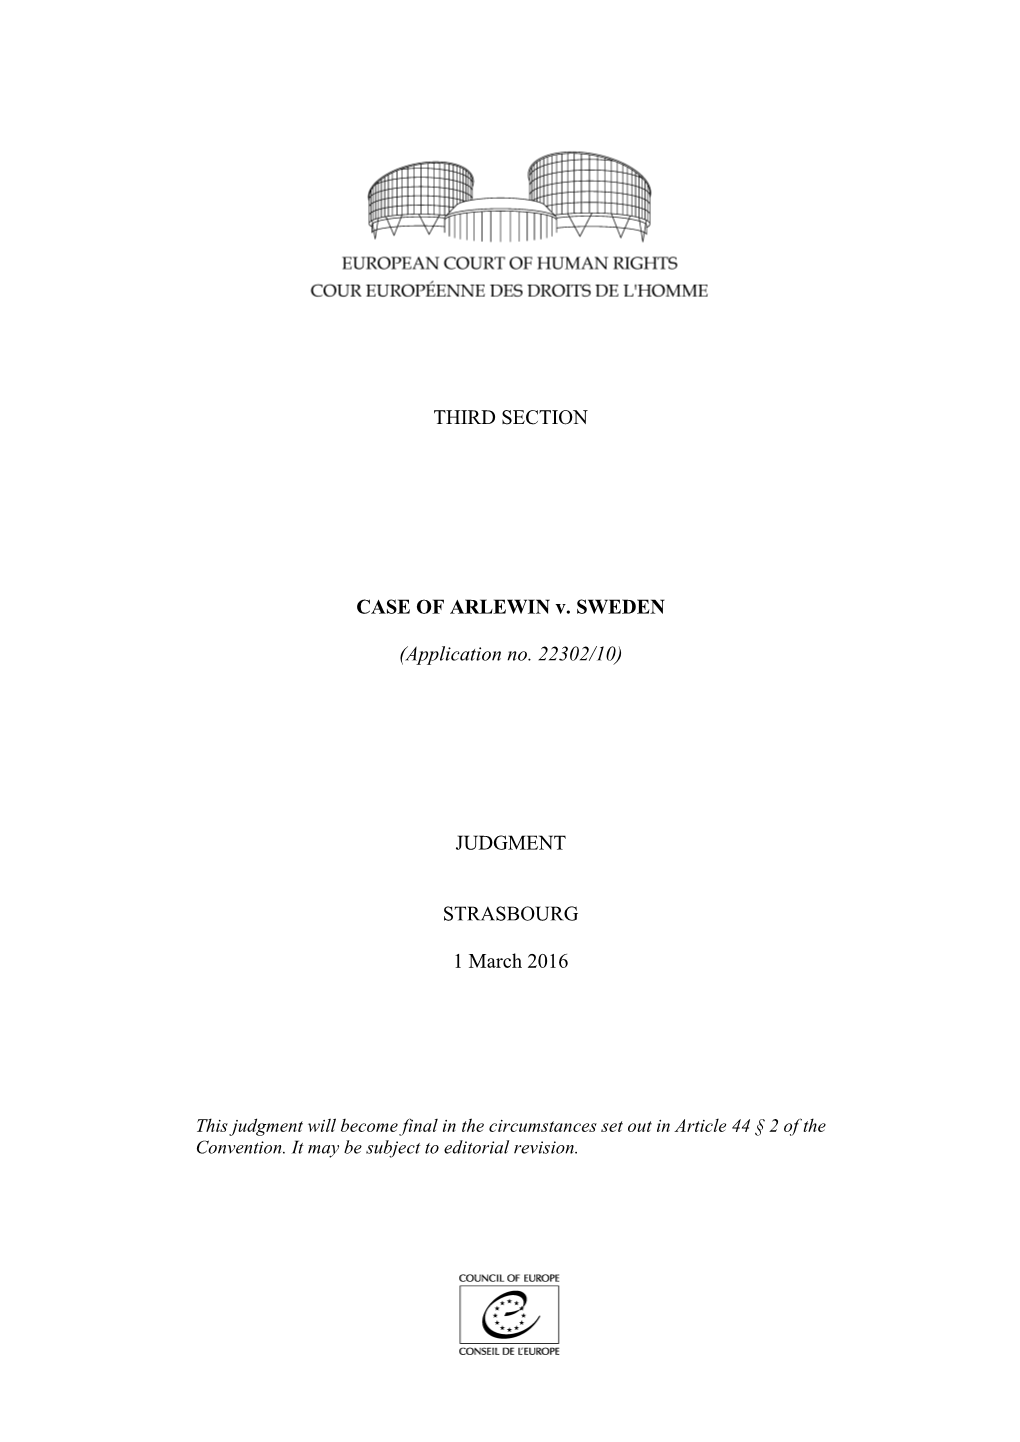 THIRD SECTION CASE of ARLEWIN V. SWEDEN